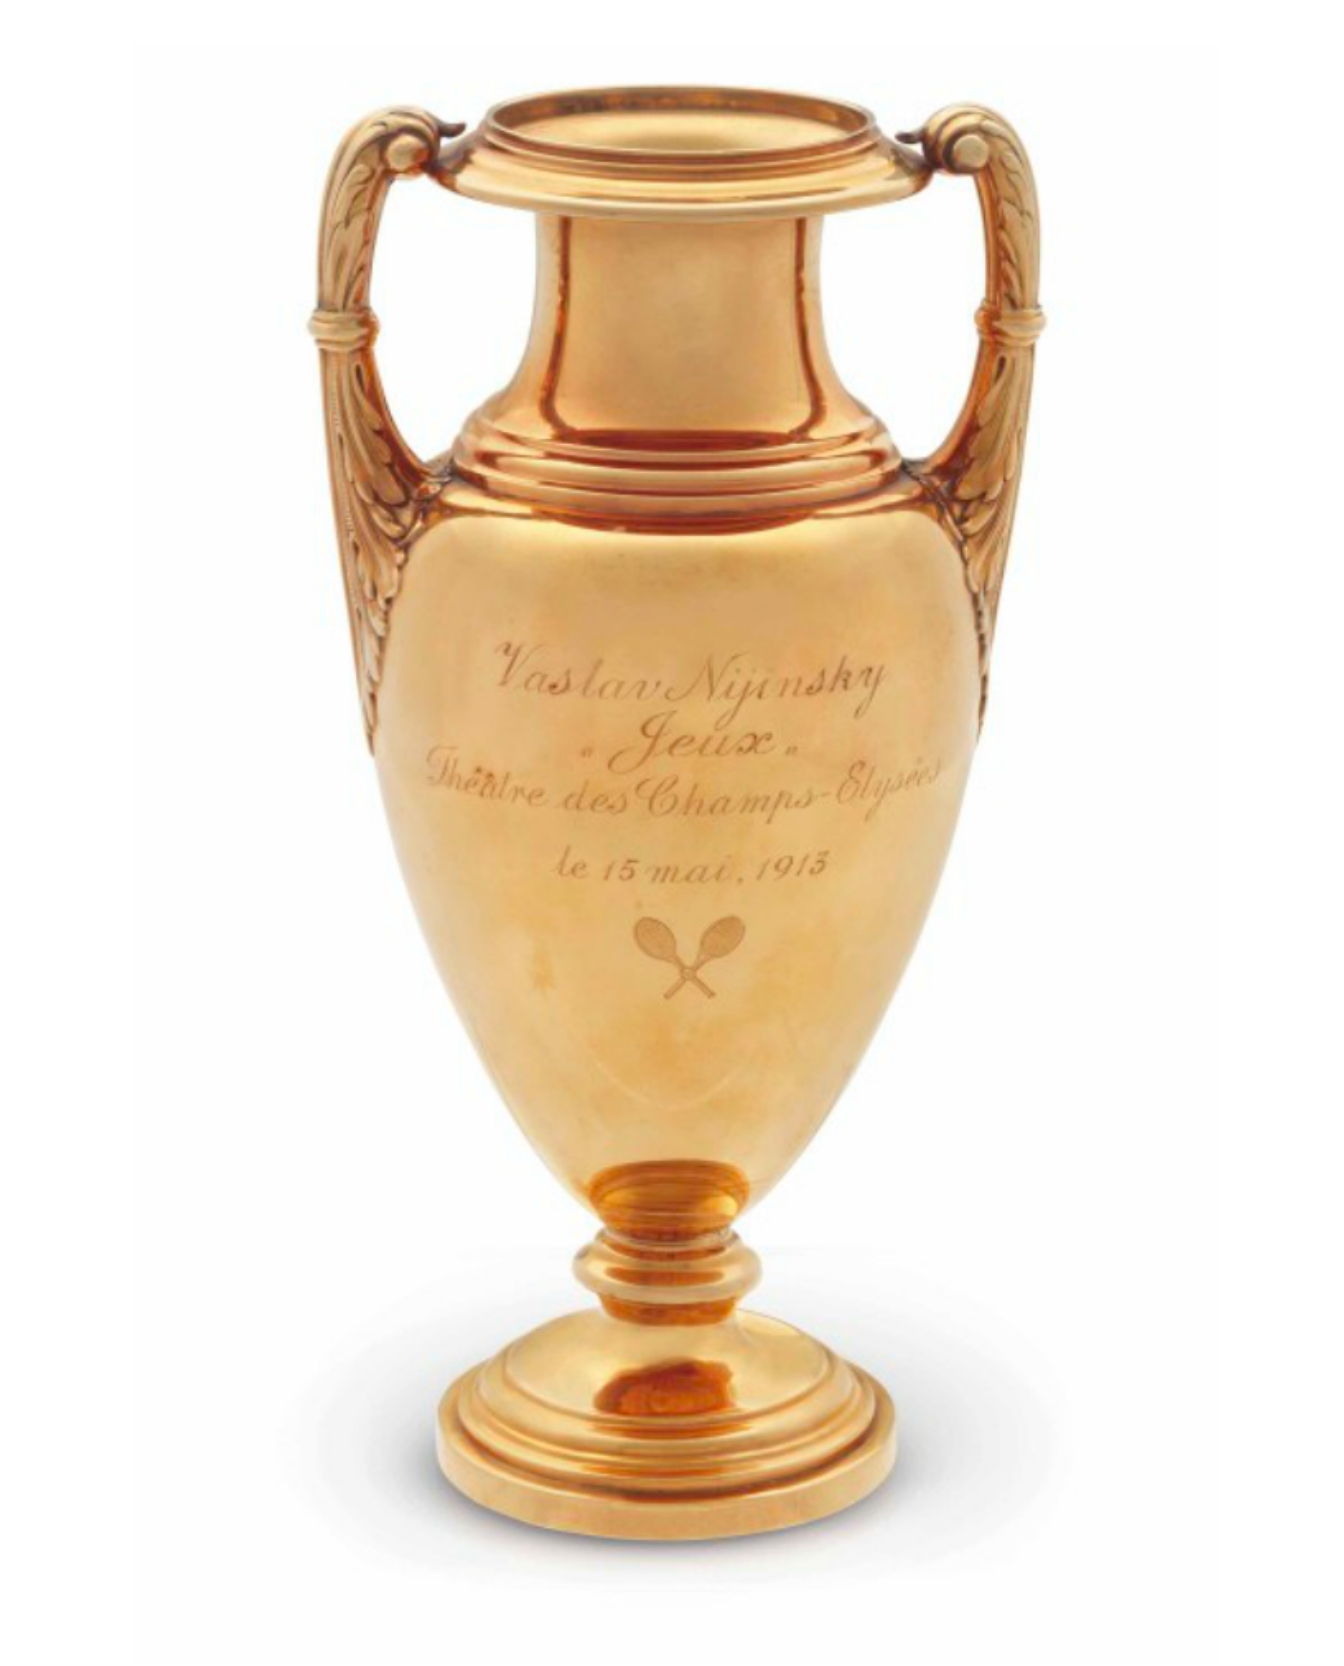 [Nijinsky, Waslaw. (1889-1950)]: Antique Gold Vessel, Presented to Nijinsky after the Premiere of Debussy's "Jeux"